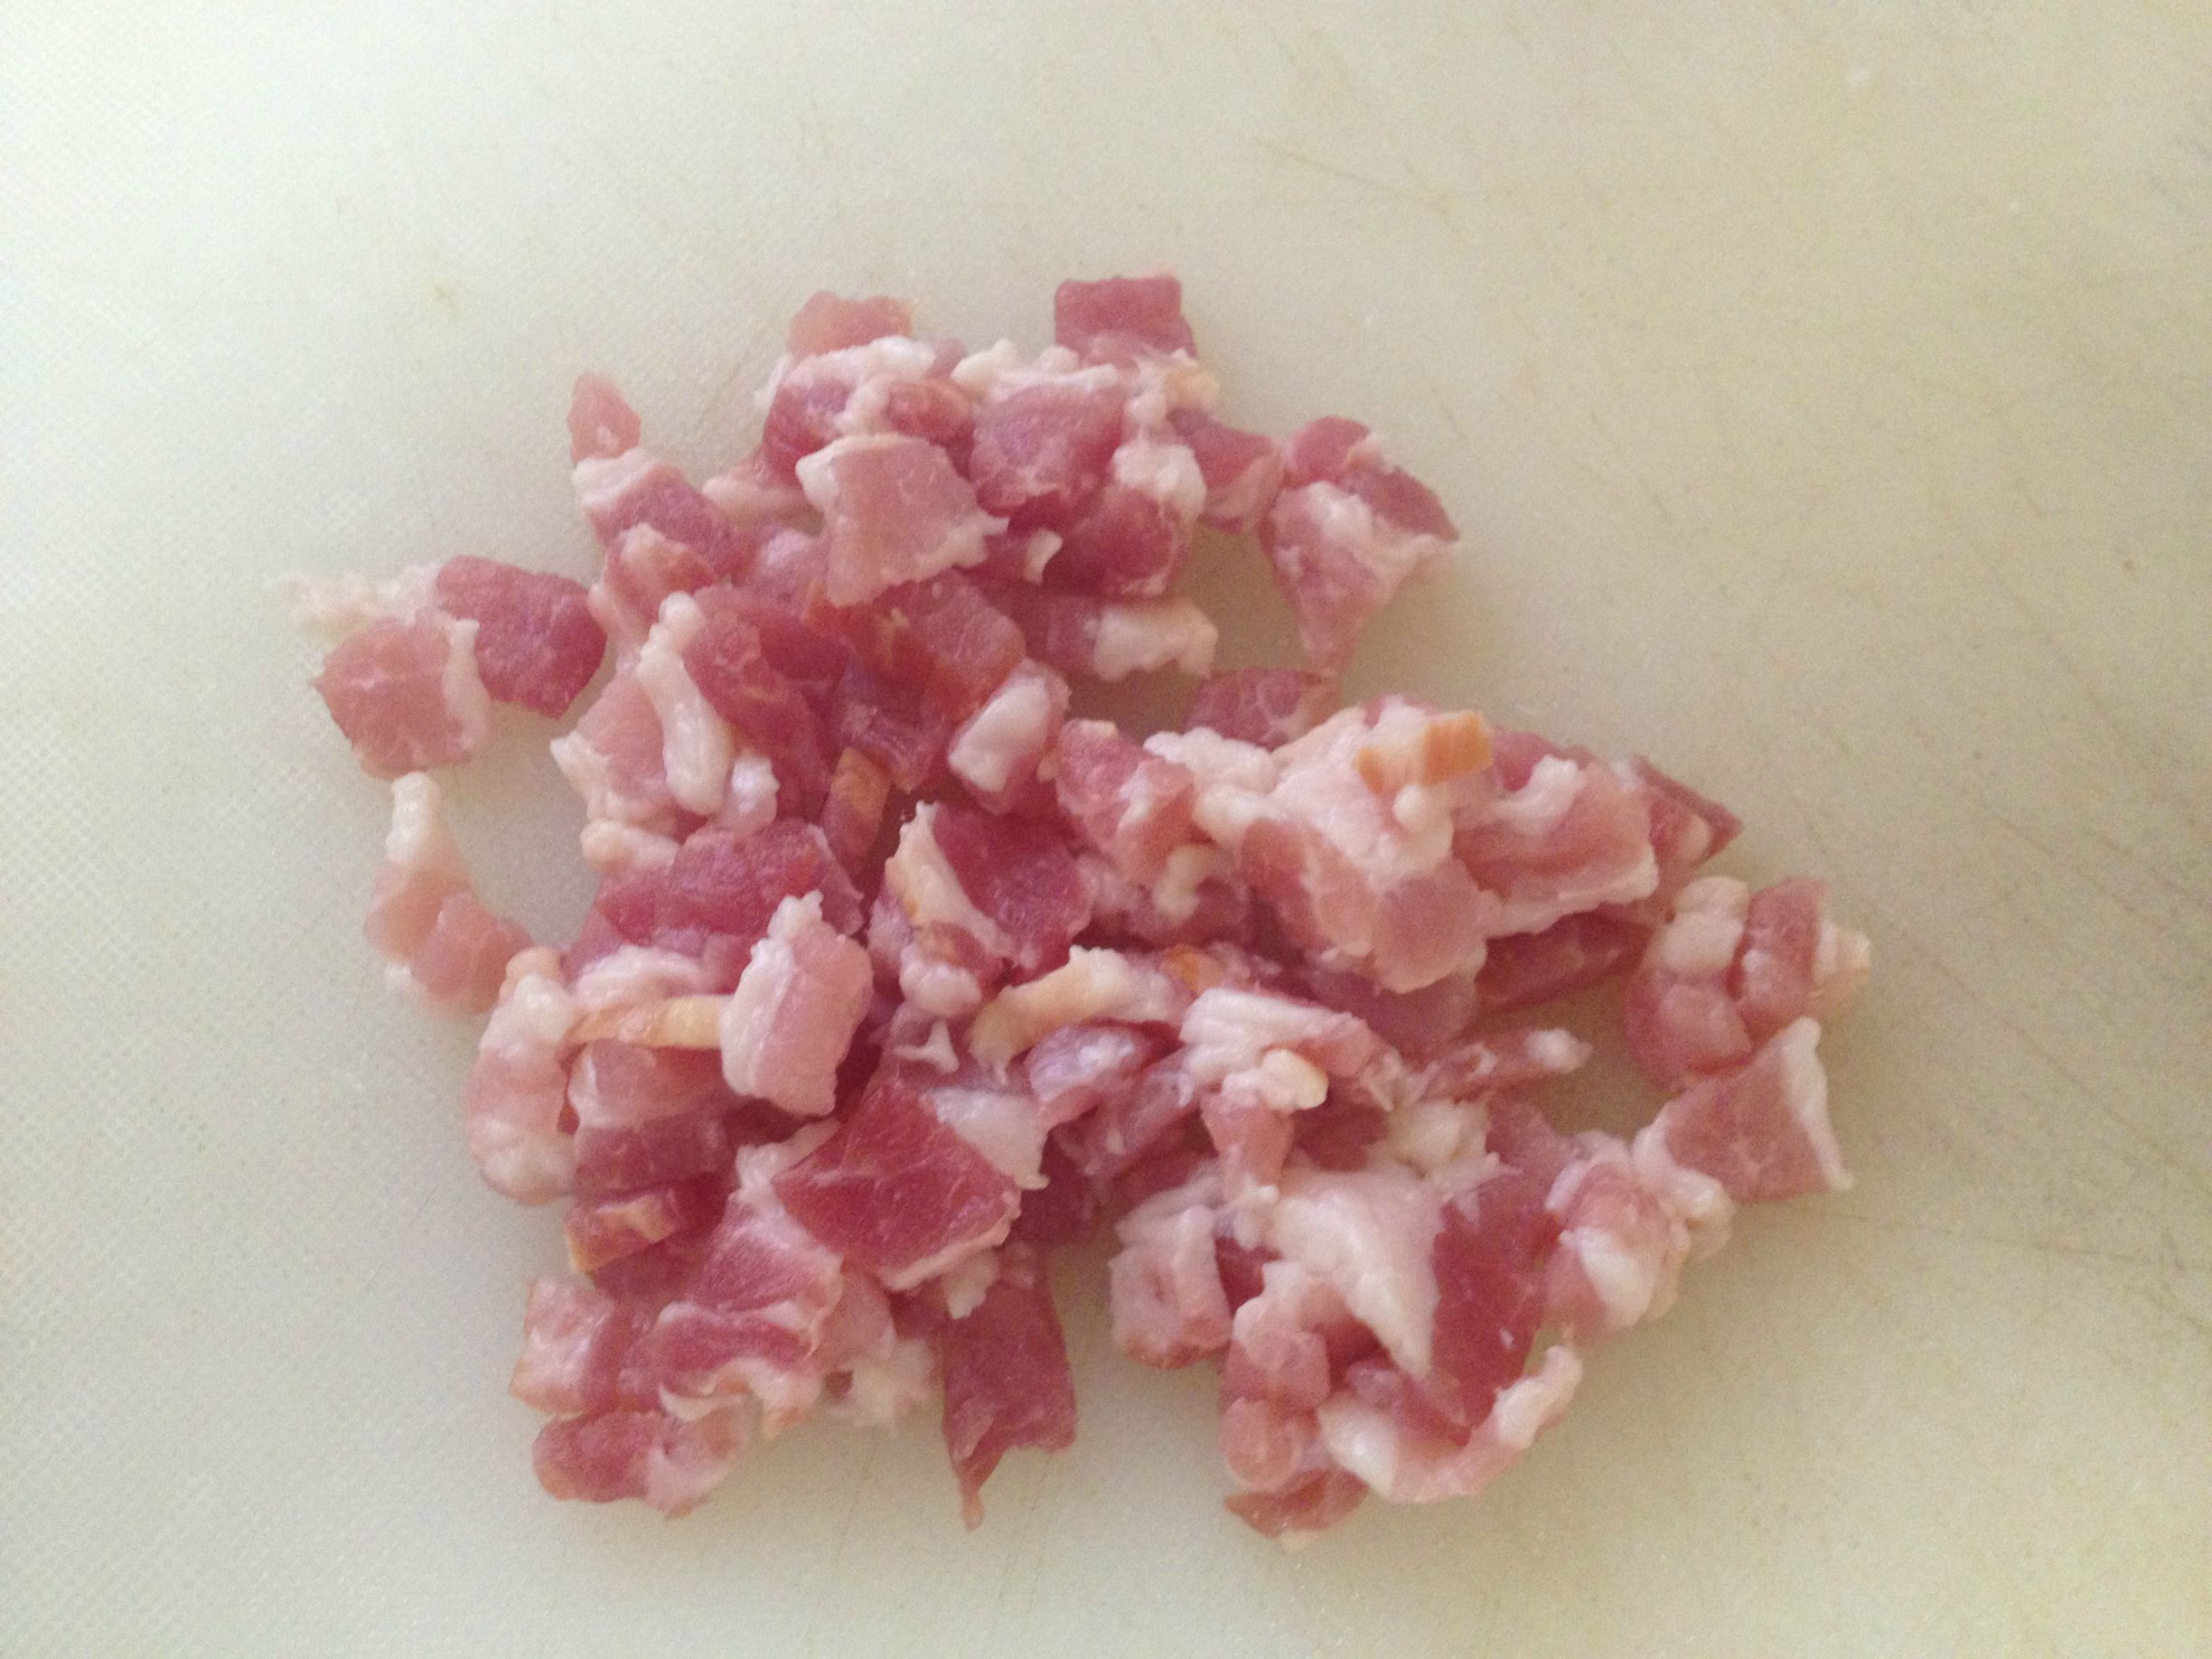 Bacon diced into small pieces